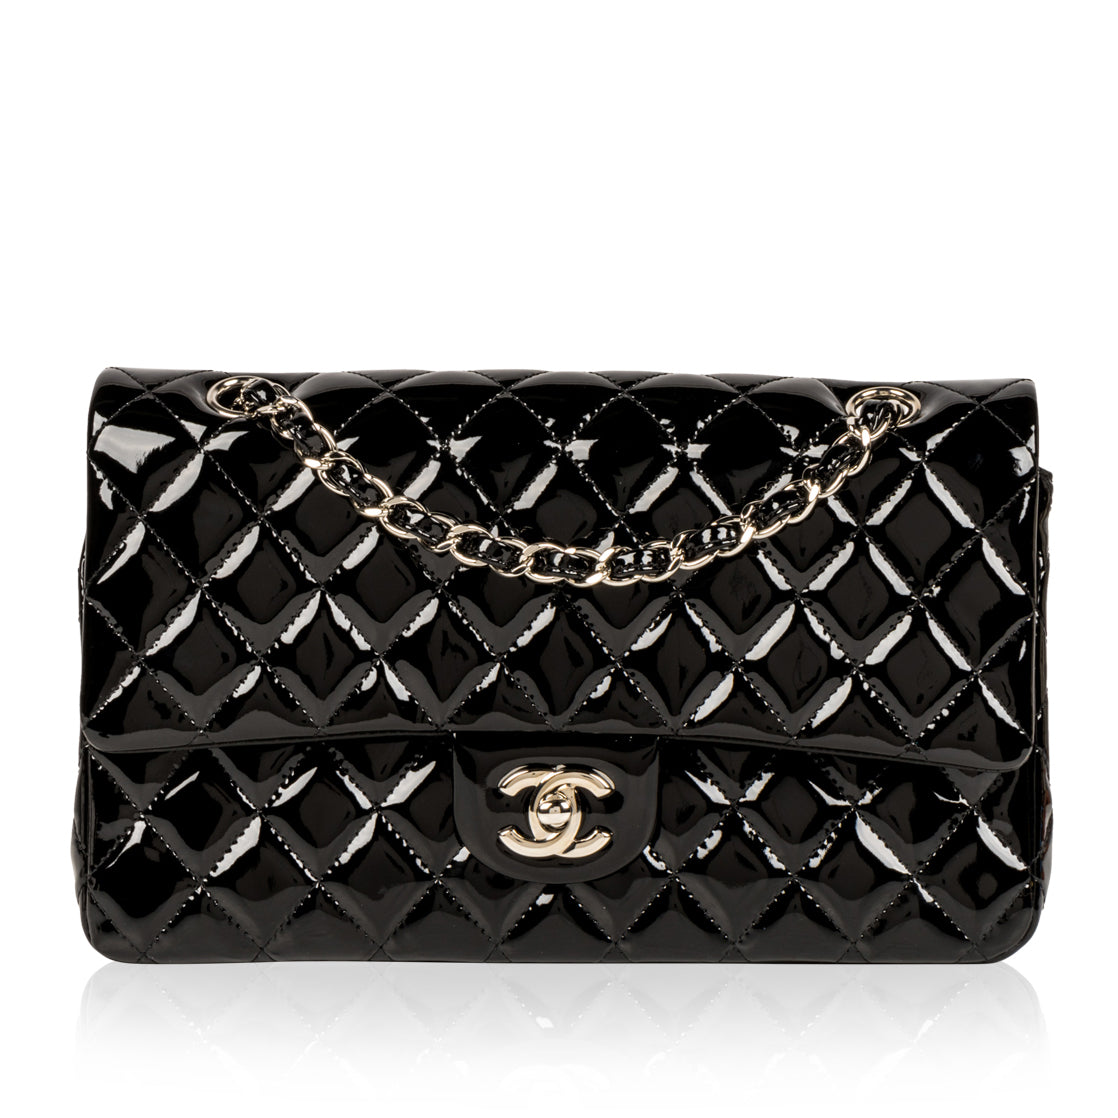 Review: Chanel Medium Secret Label Flap Bag PurseBlog